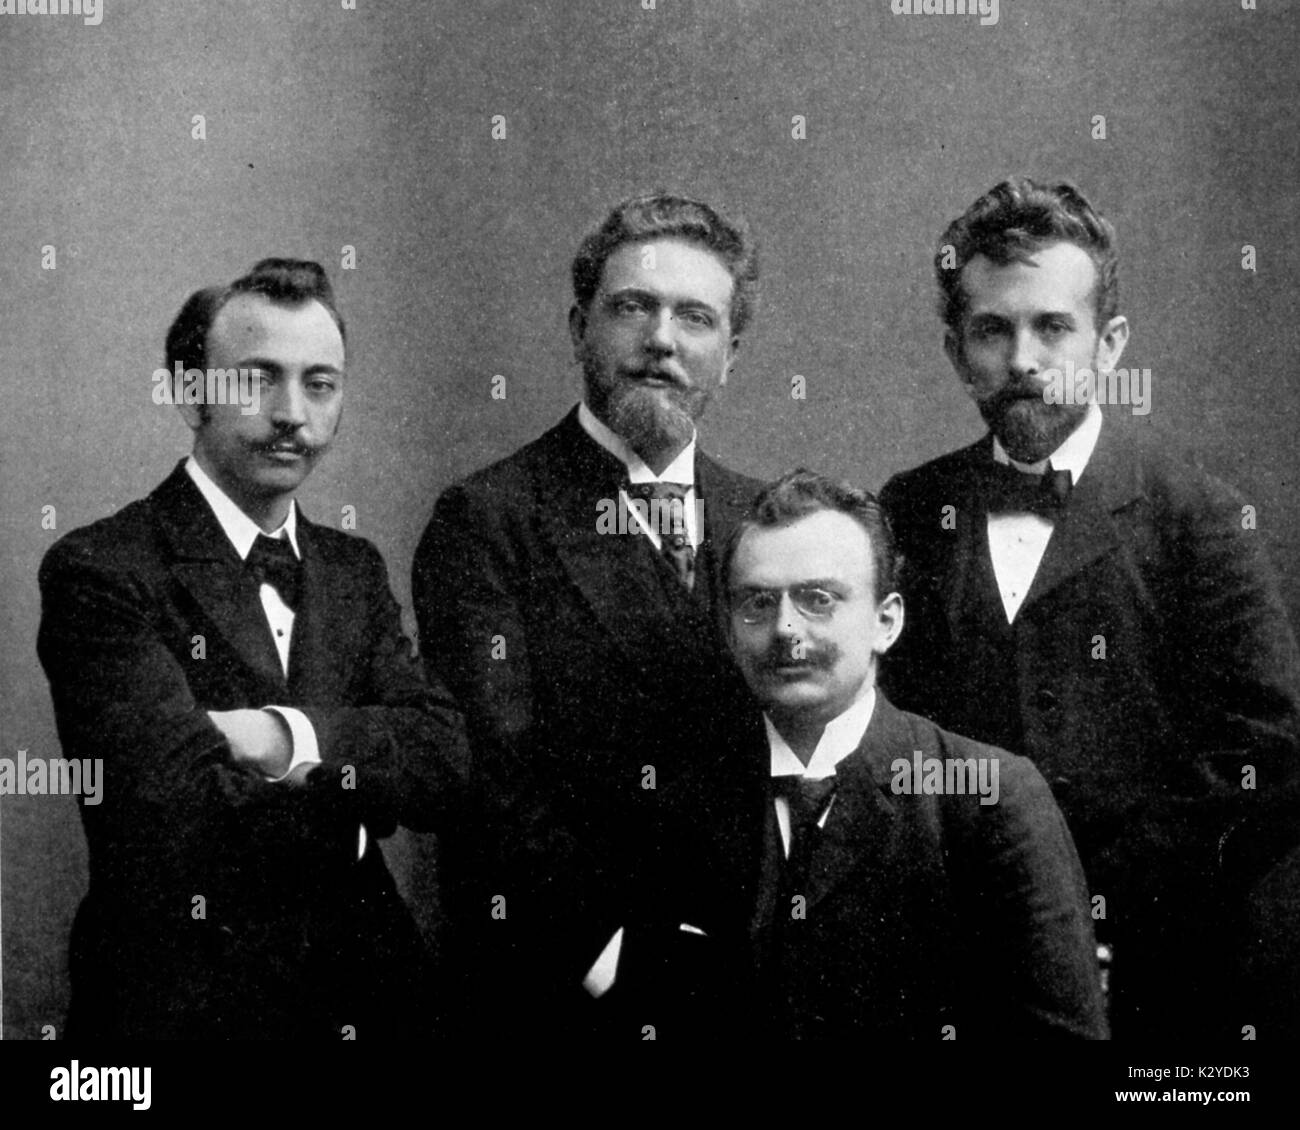 Brussels String Quartet:  Franz Schorg (1st Violin); H. Daucher (2nd Violin);P. Miry (Viola); and J. Gaillard (Cello). Early 20th century. Stock Photo